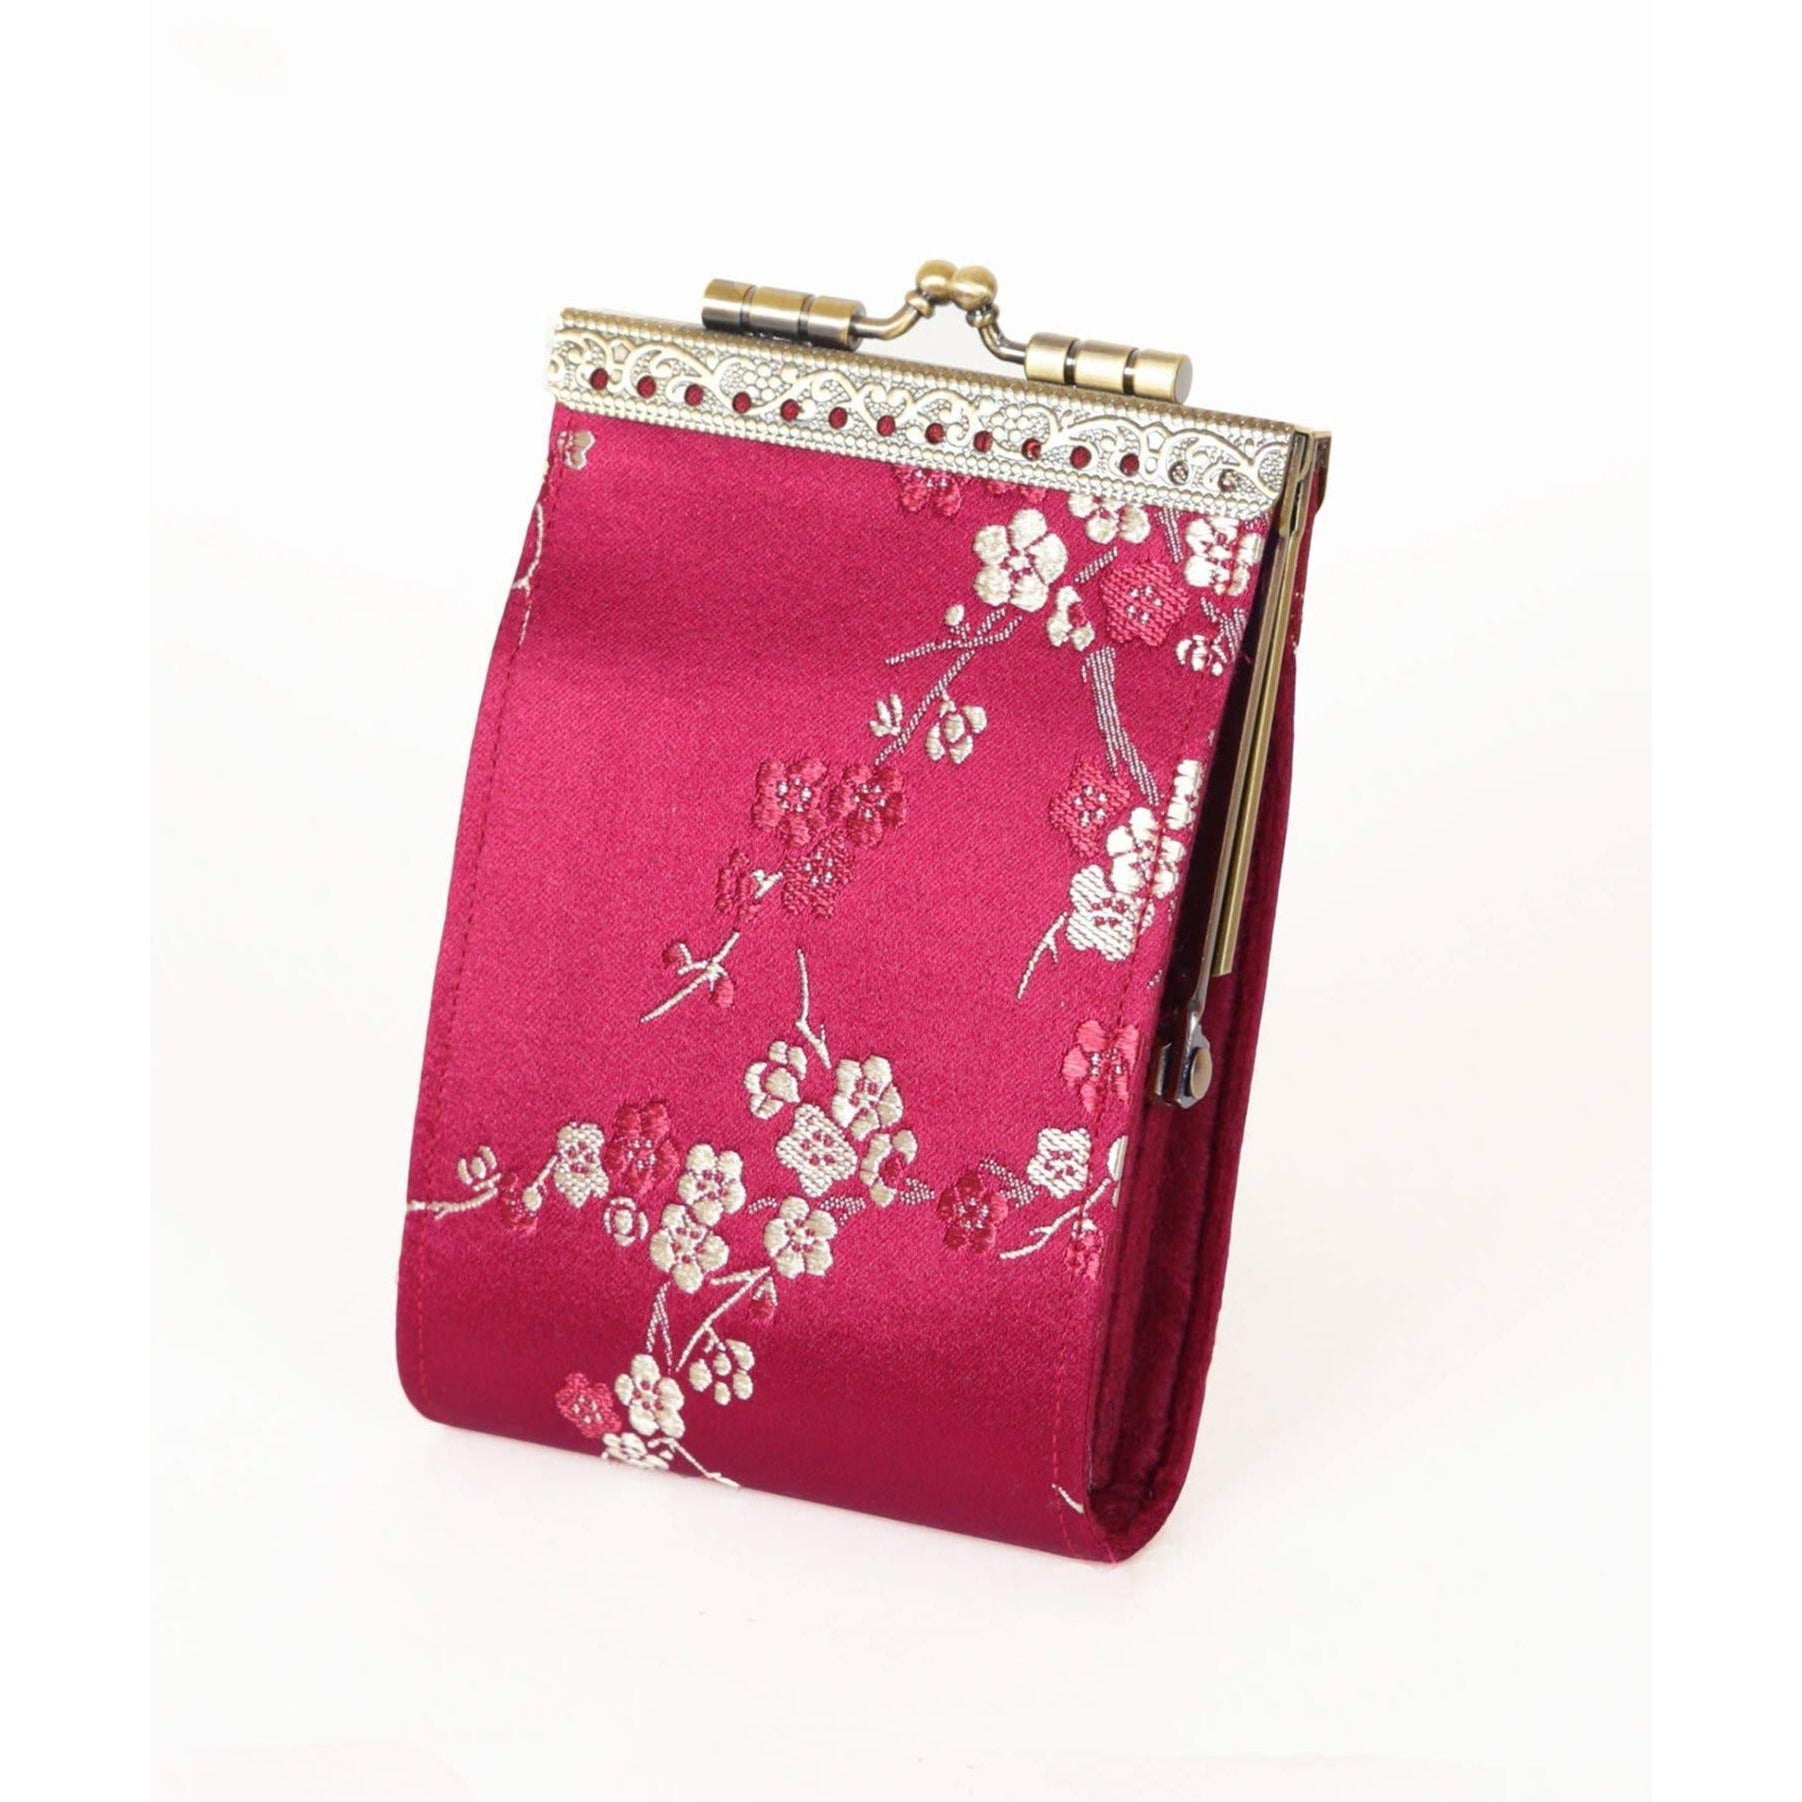 Art Japan Cherry Blossom Wallet for Women Leather Zipper Phone Coin Purse